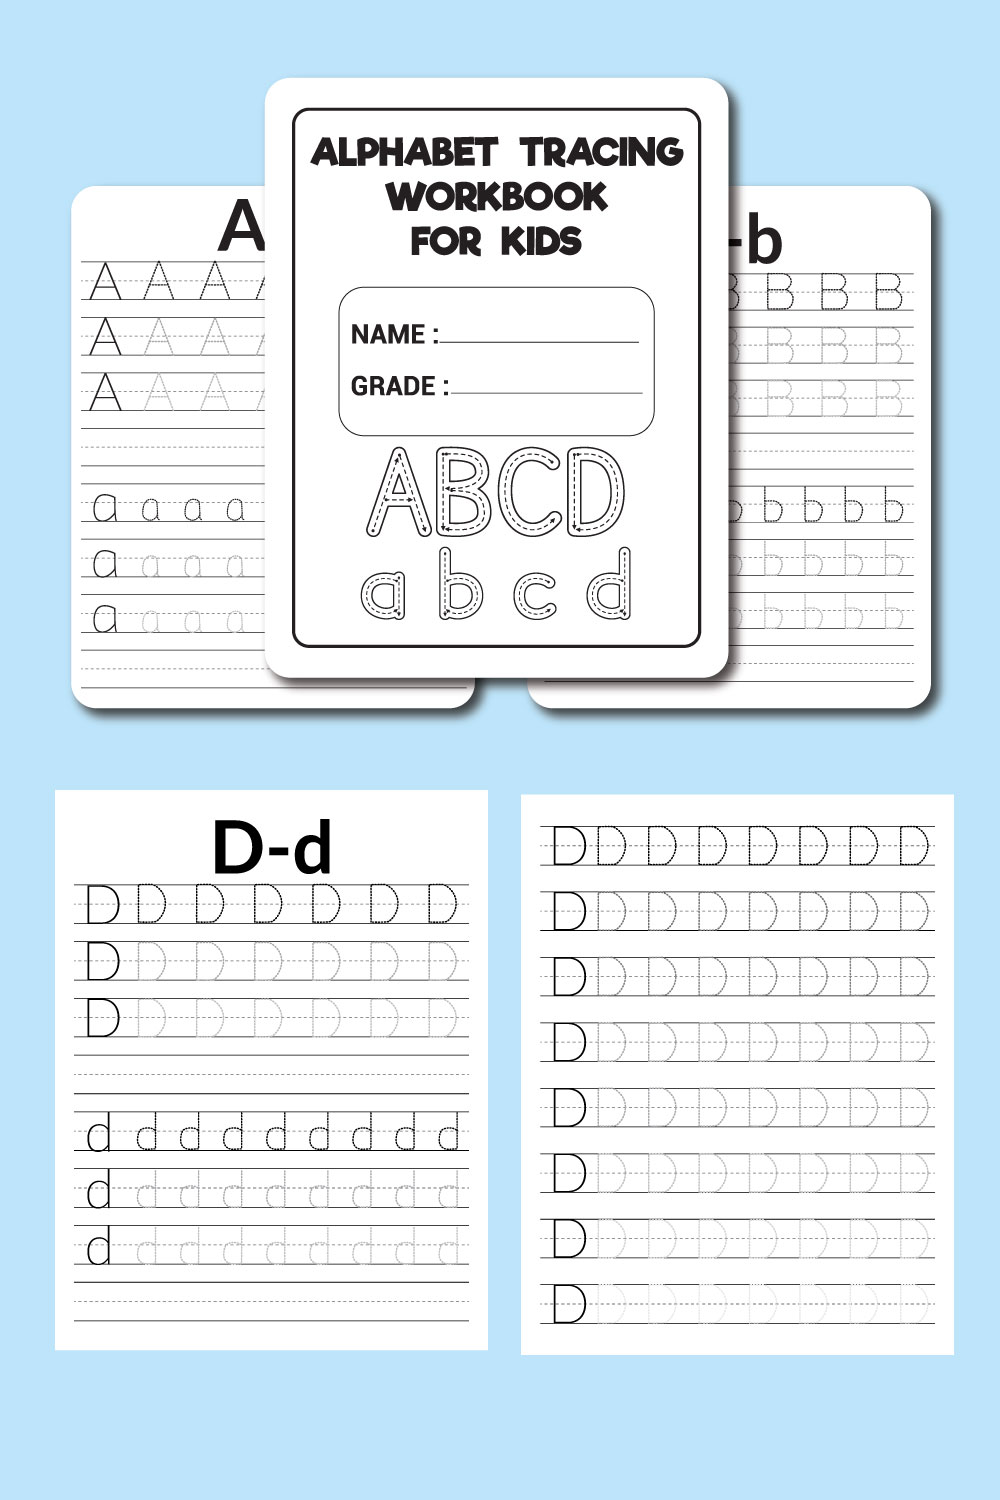 Alphabet Tracing Workbook For Kids pinterest image.